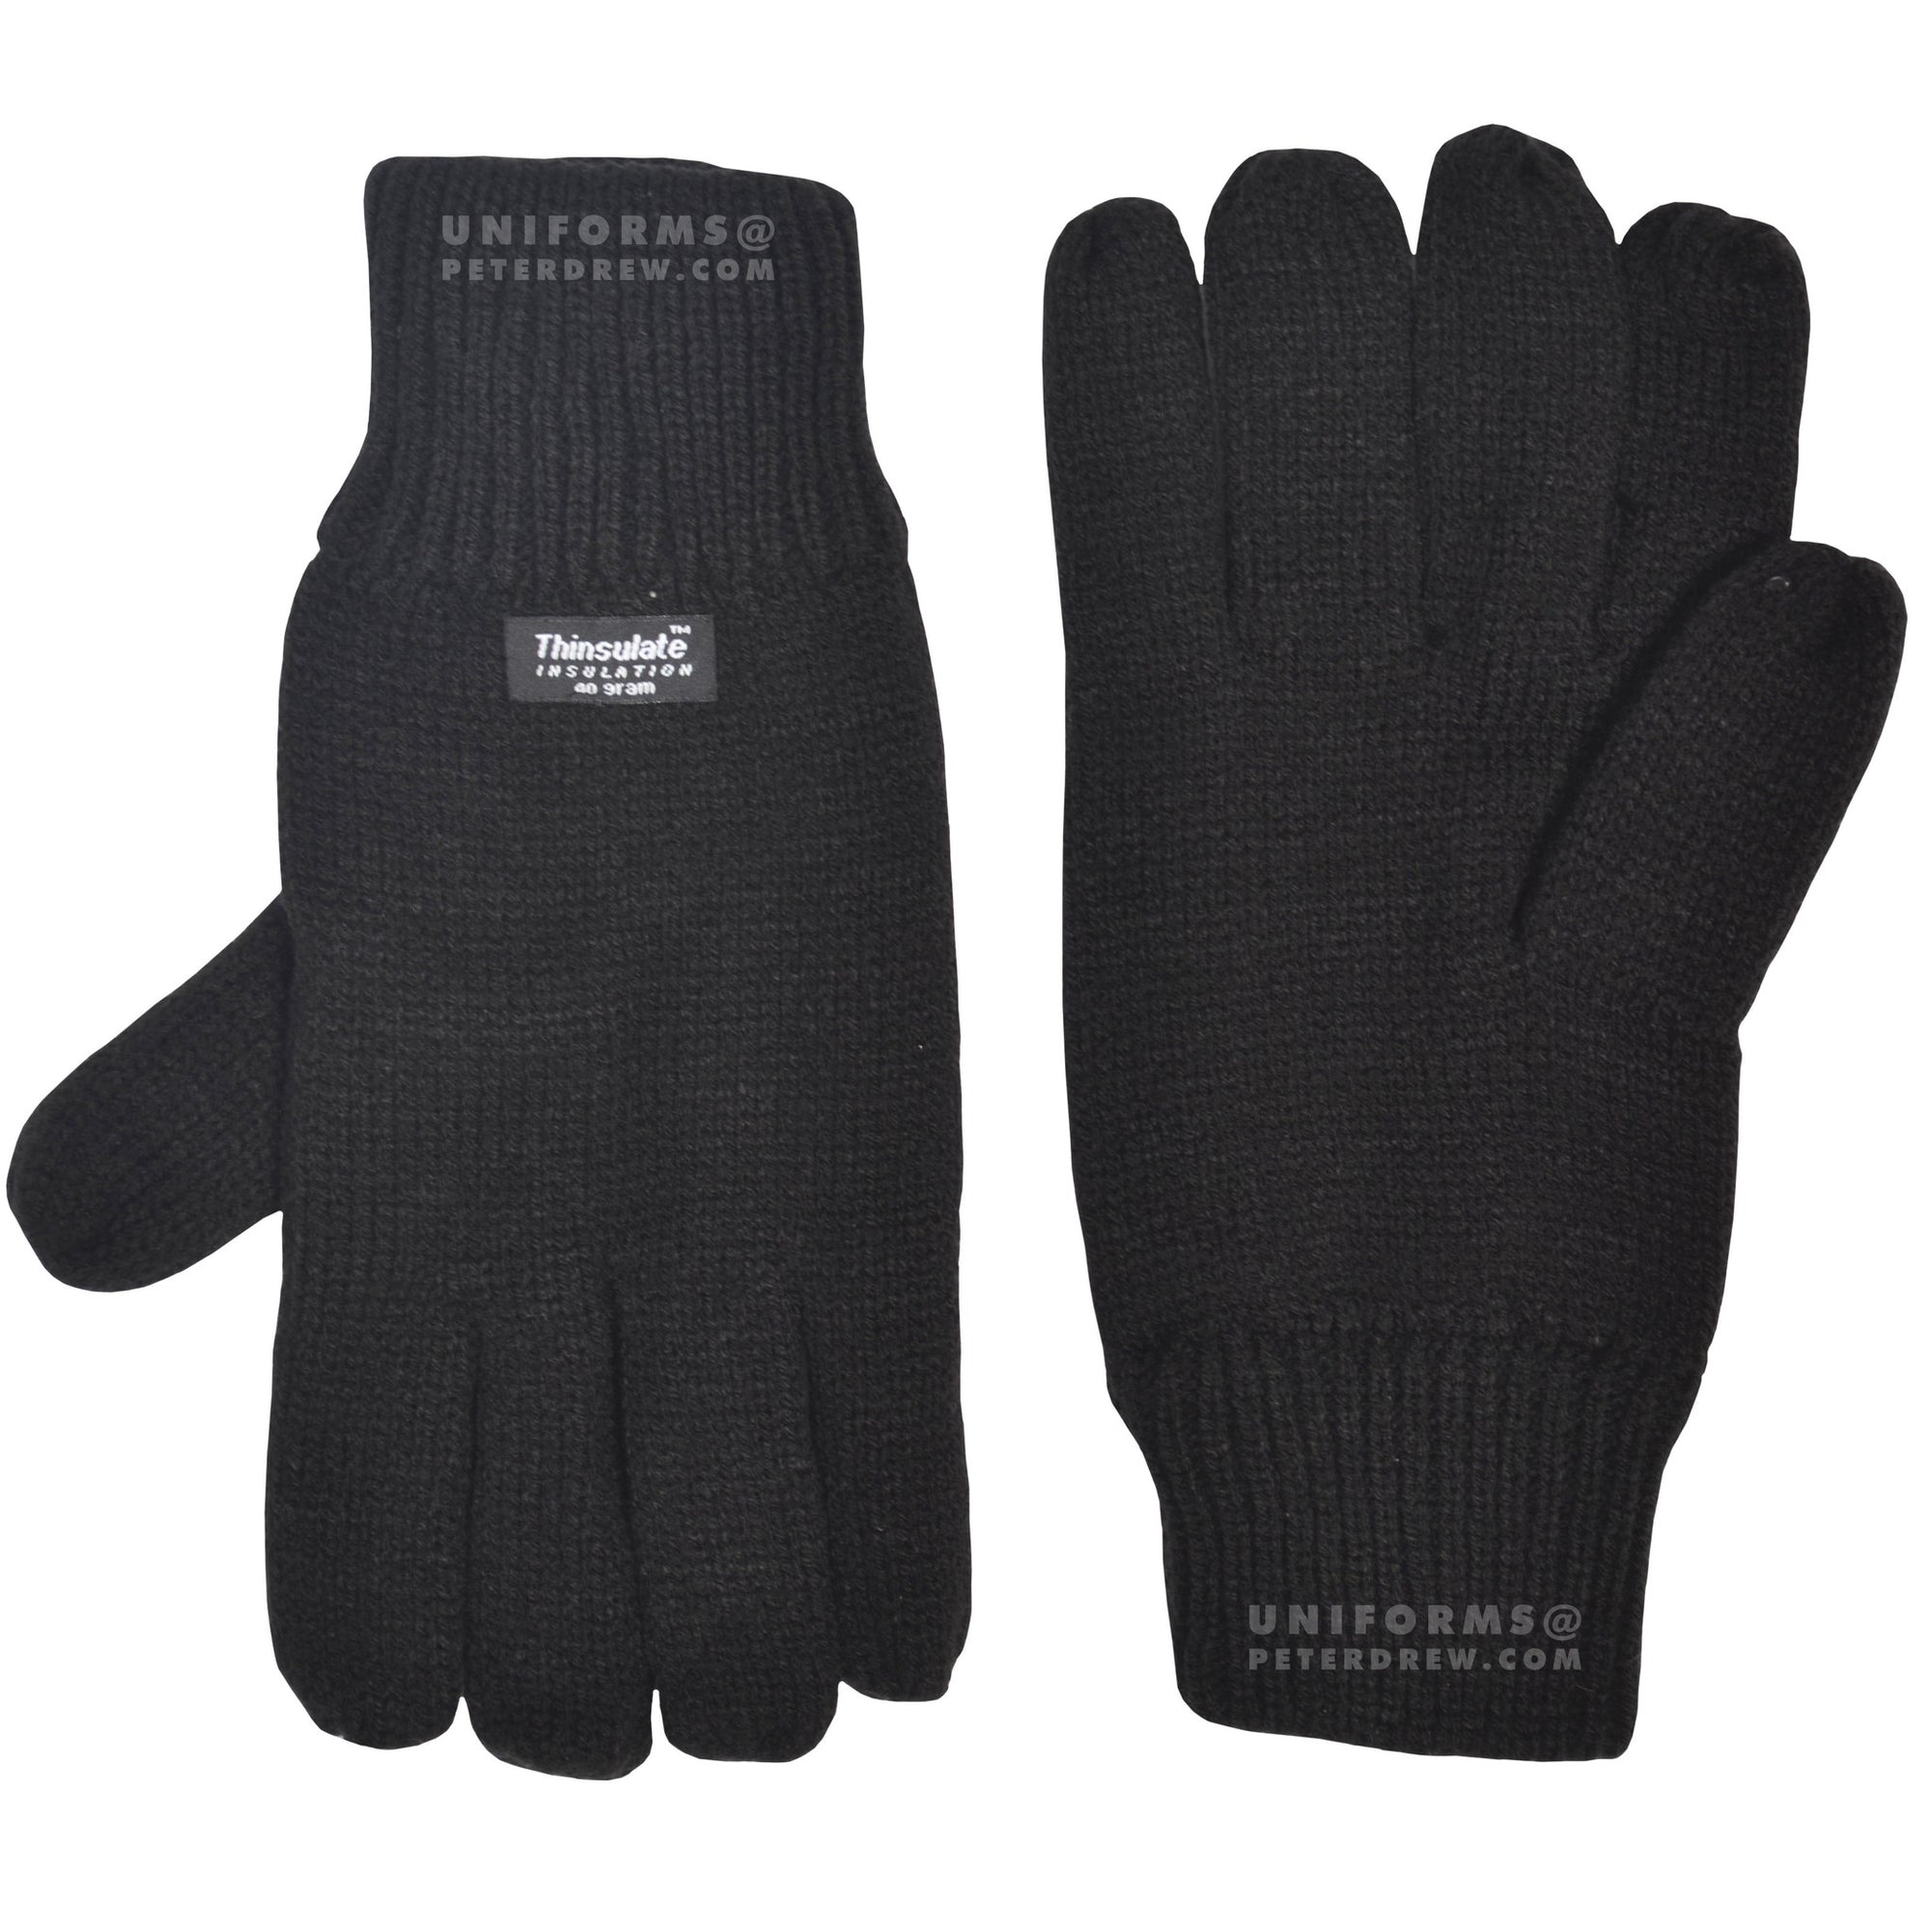 Woolly Gloves - peterdrew.com
